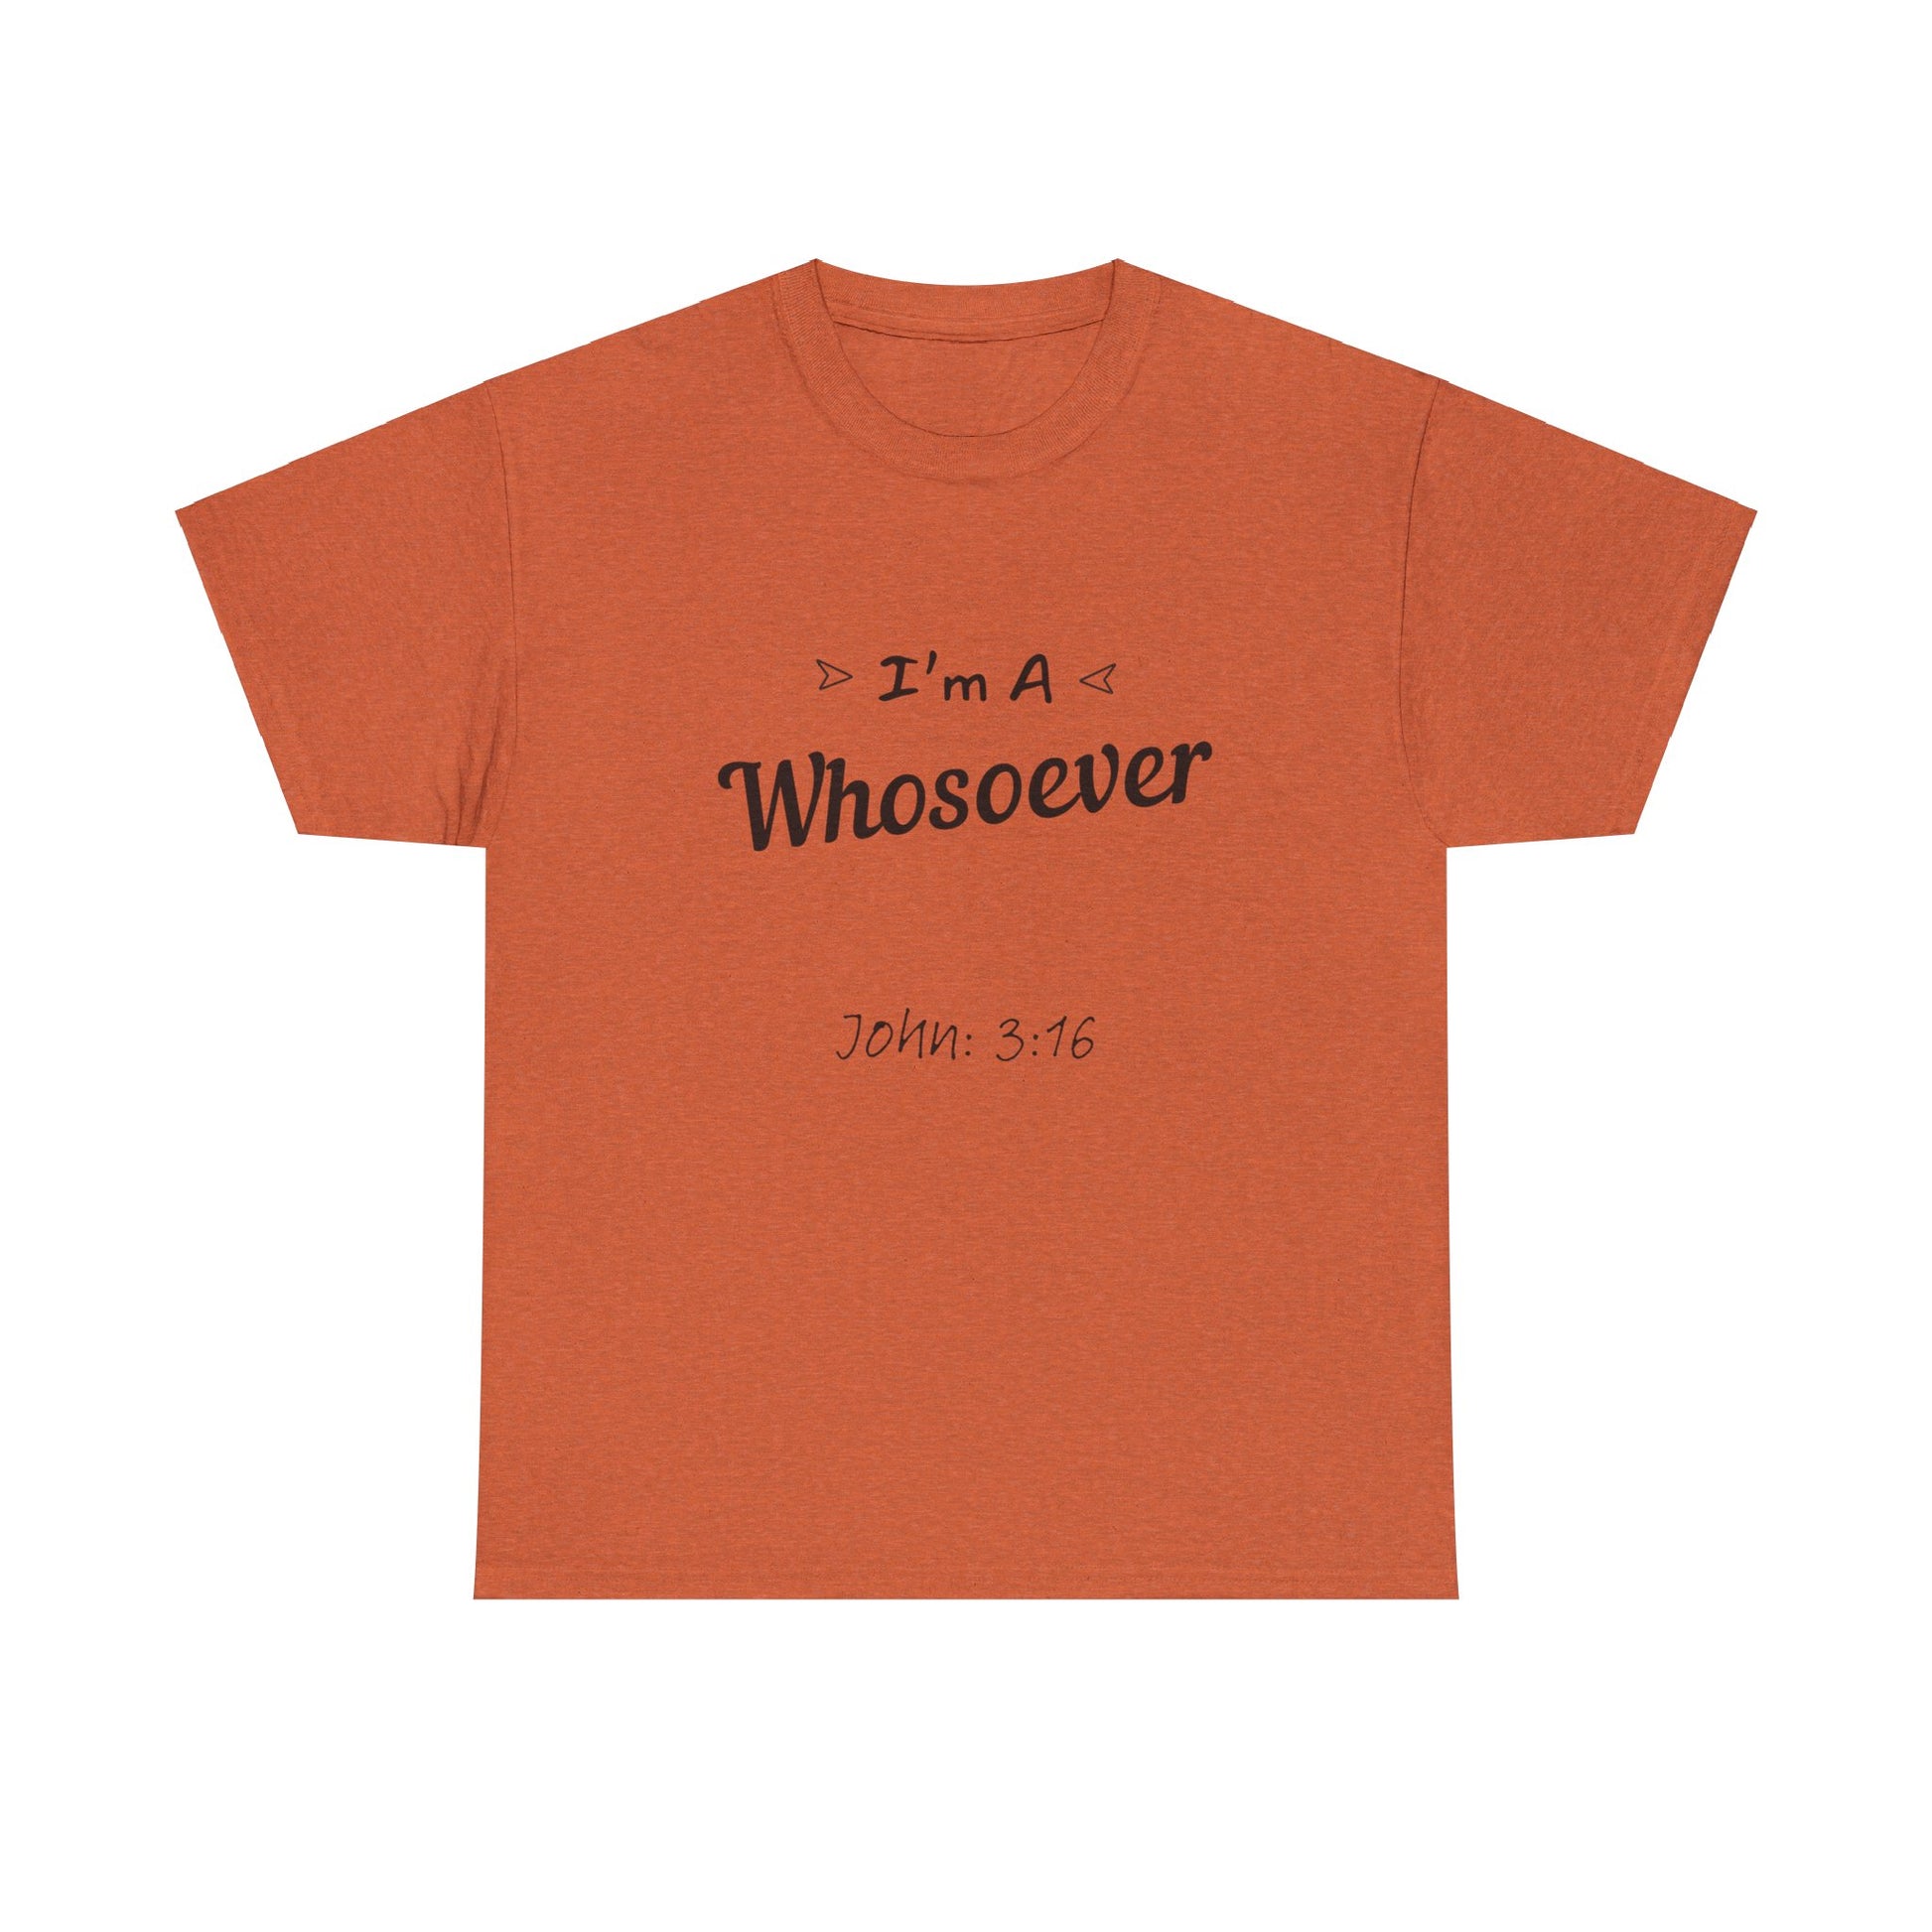 "Christian faith T-shirt with 'I'm a Whosoever' John 3:16 message."